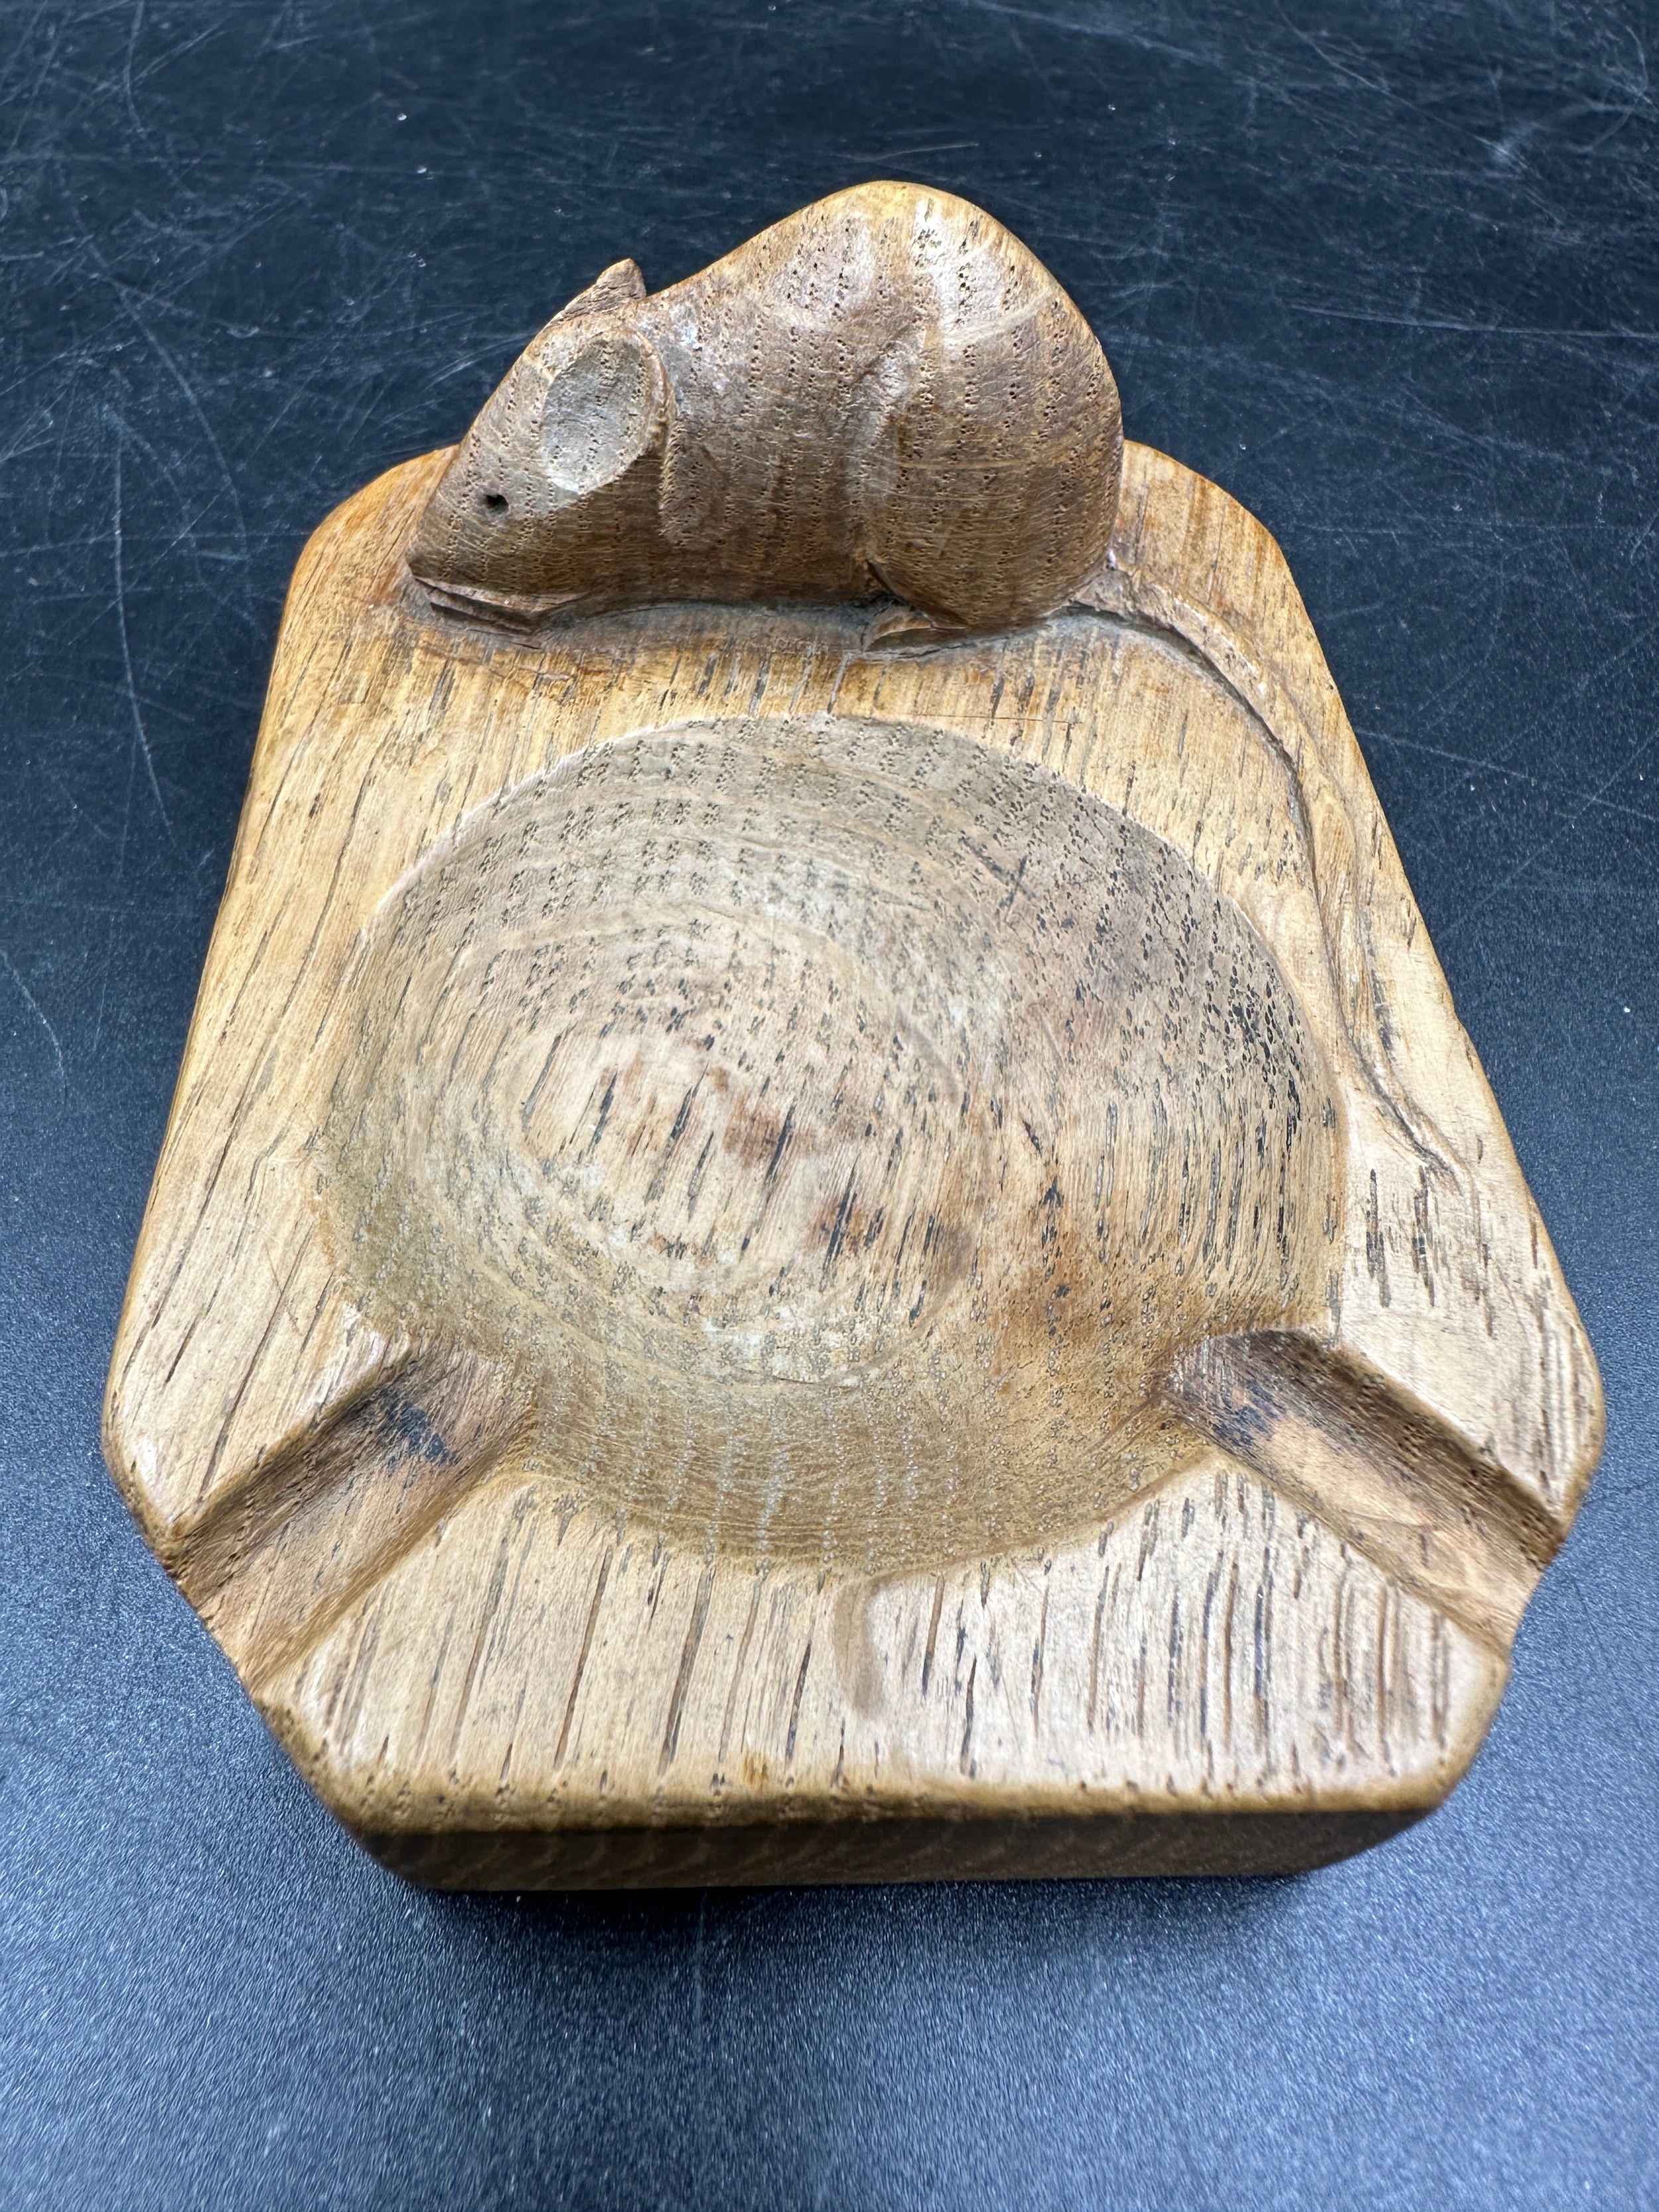 Robert Thompson 'Mouseman' Oak ashtray, tail to right 10cm x 7.5cm.